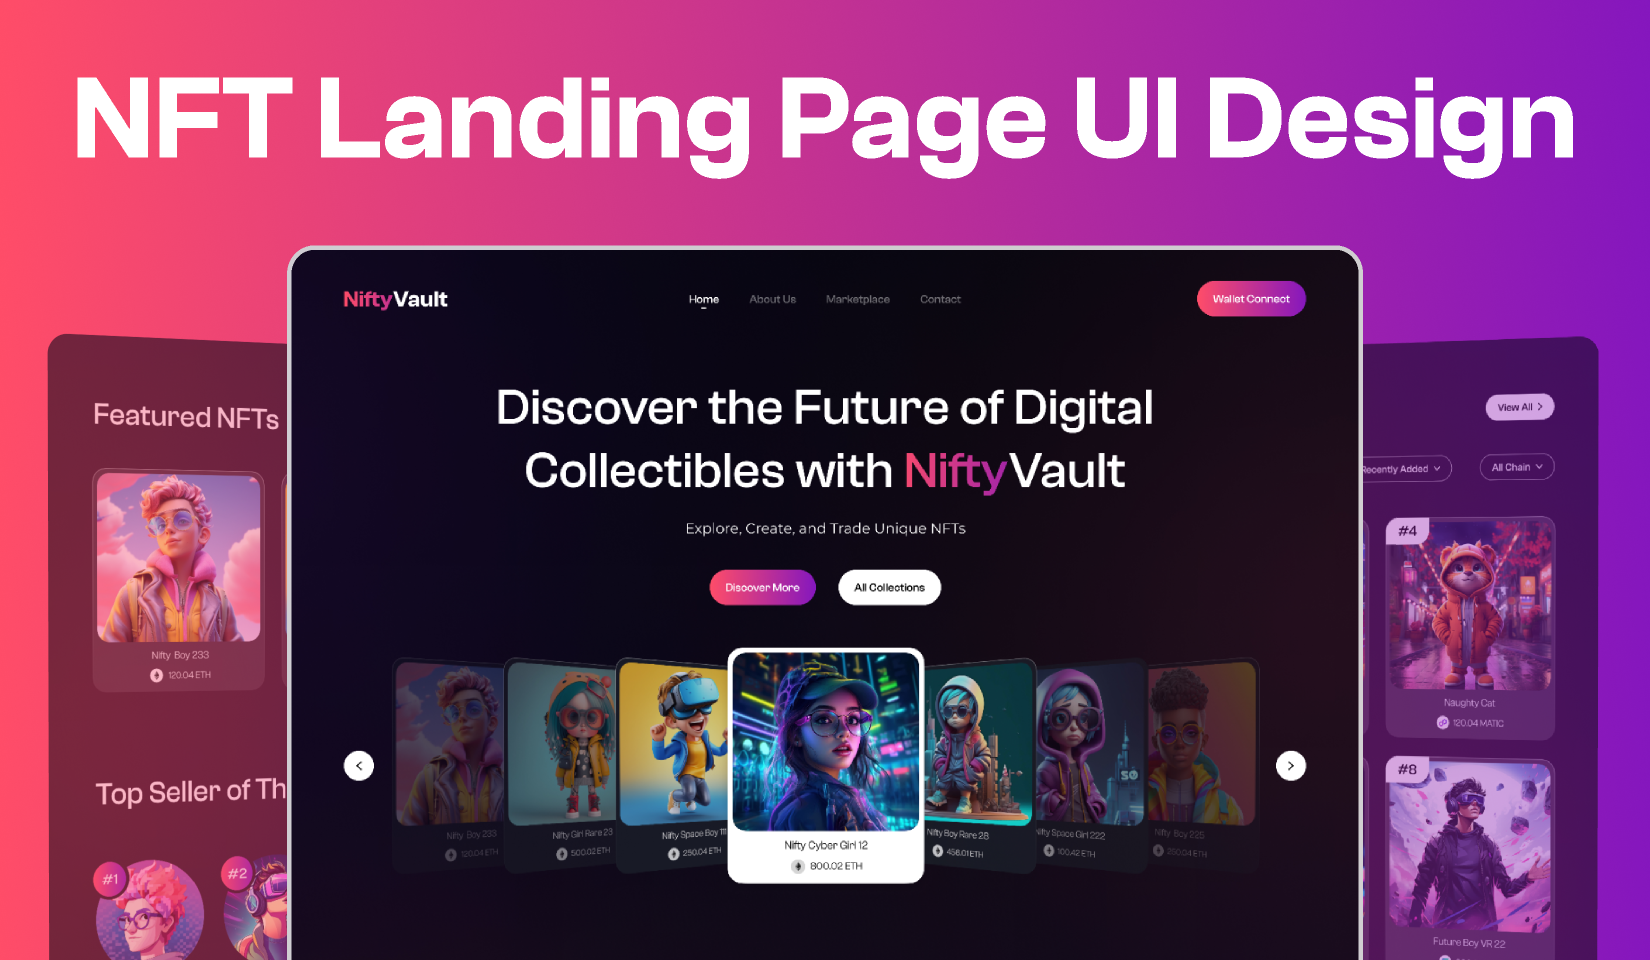 NFT Landing Page UI Design